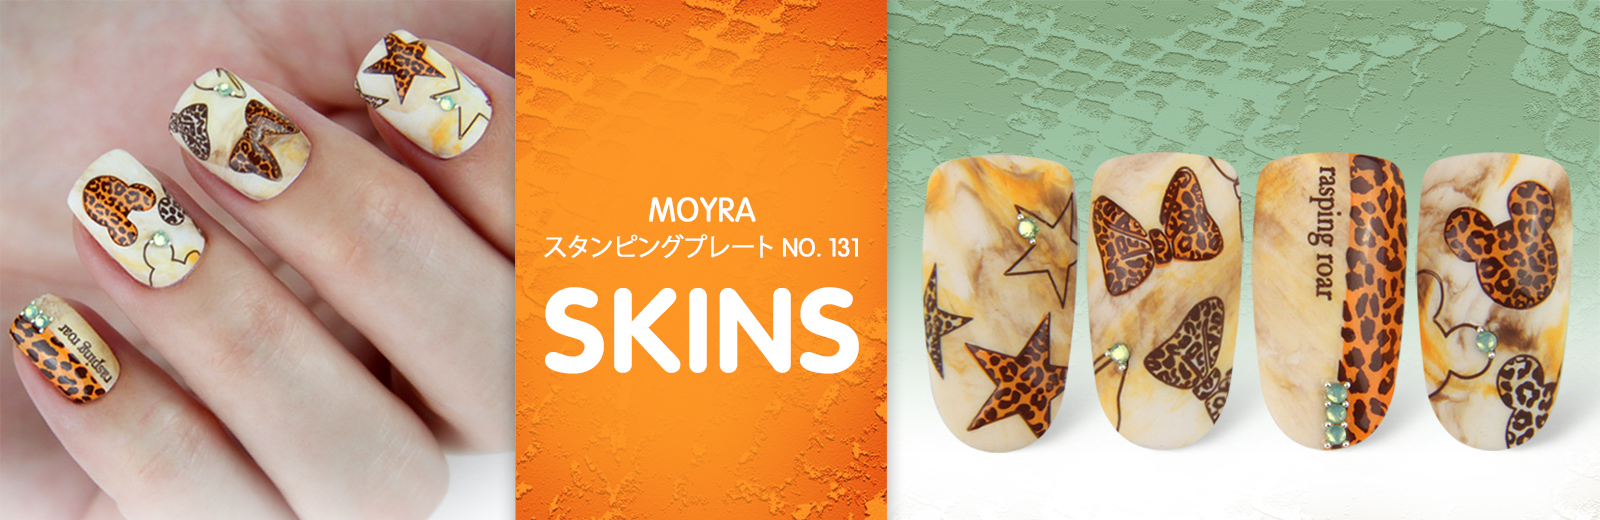 Moyra スタンピングプレート Stamping plate 131 Skins